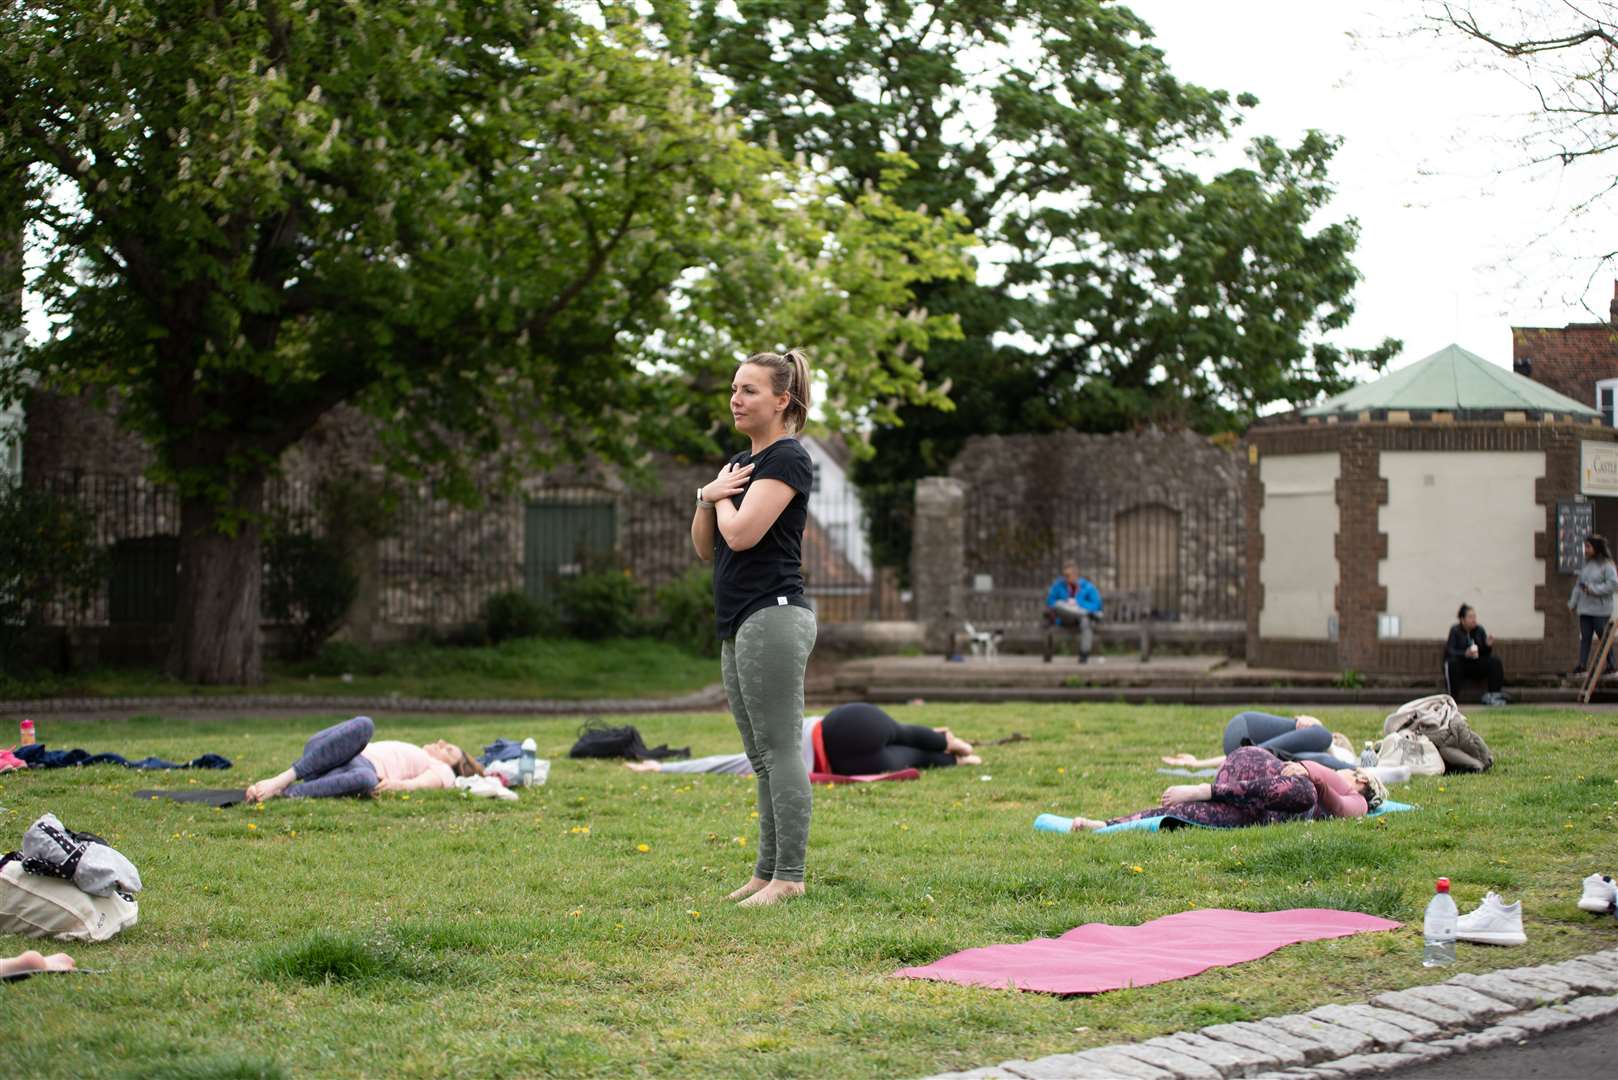 Yoga teacher Gemma Stower leads the yoga session